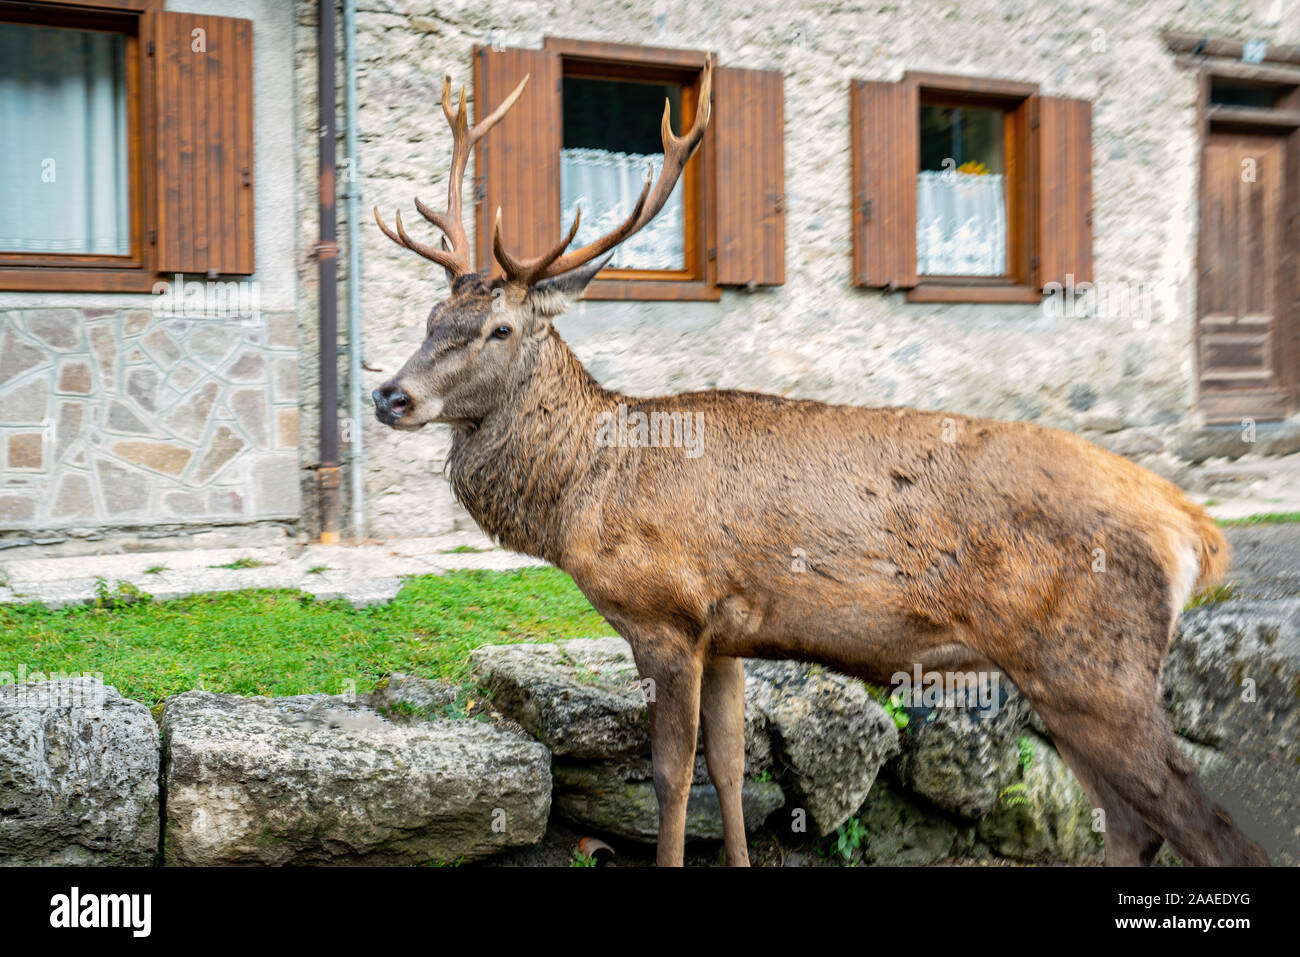 Portrait of a deer in a front yard of a house in Pian Molin-Costa di Mezzo in Belluno, italian Dolomites Stock Photo